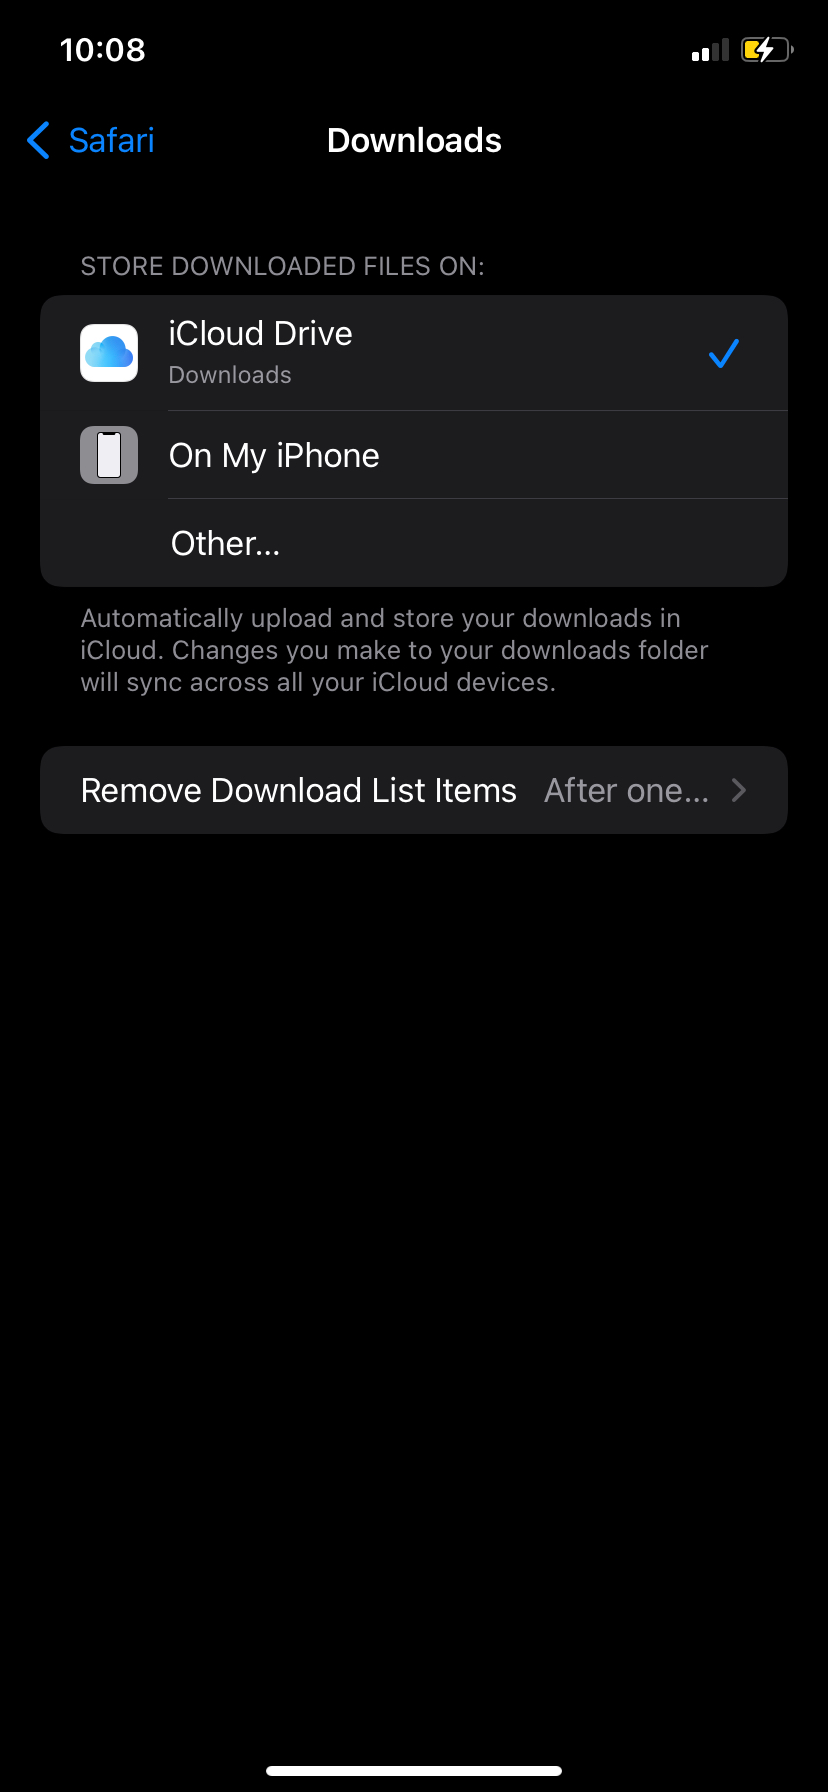 Safari download location settings page on iOS